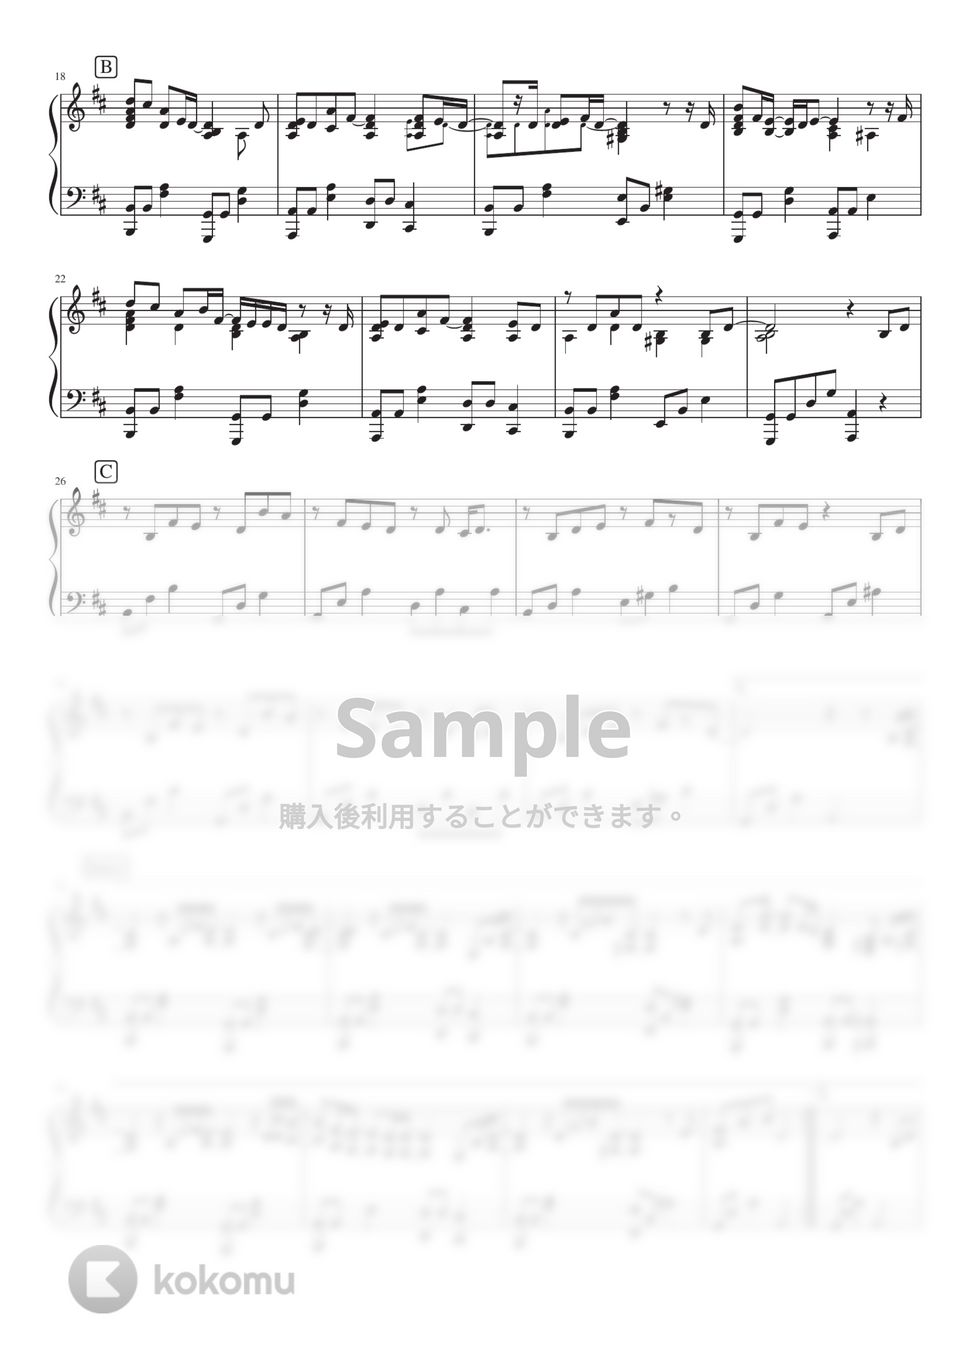 DATEKEN - なまえのないうた (PianoSolo) by 深根 / Fukane